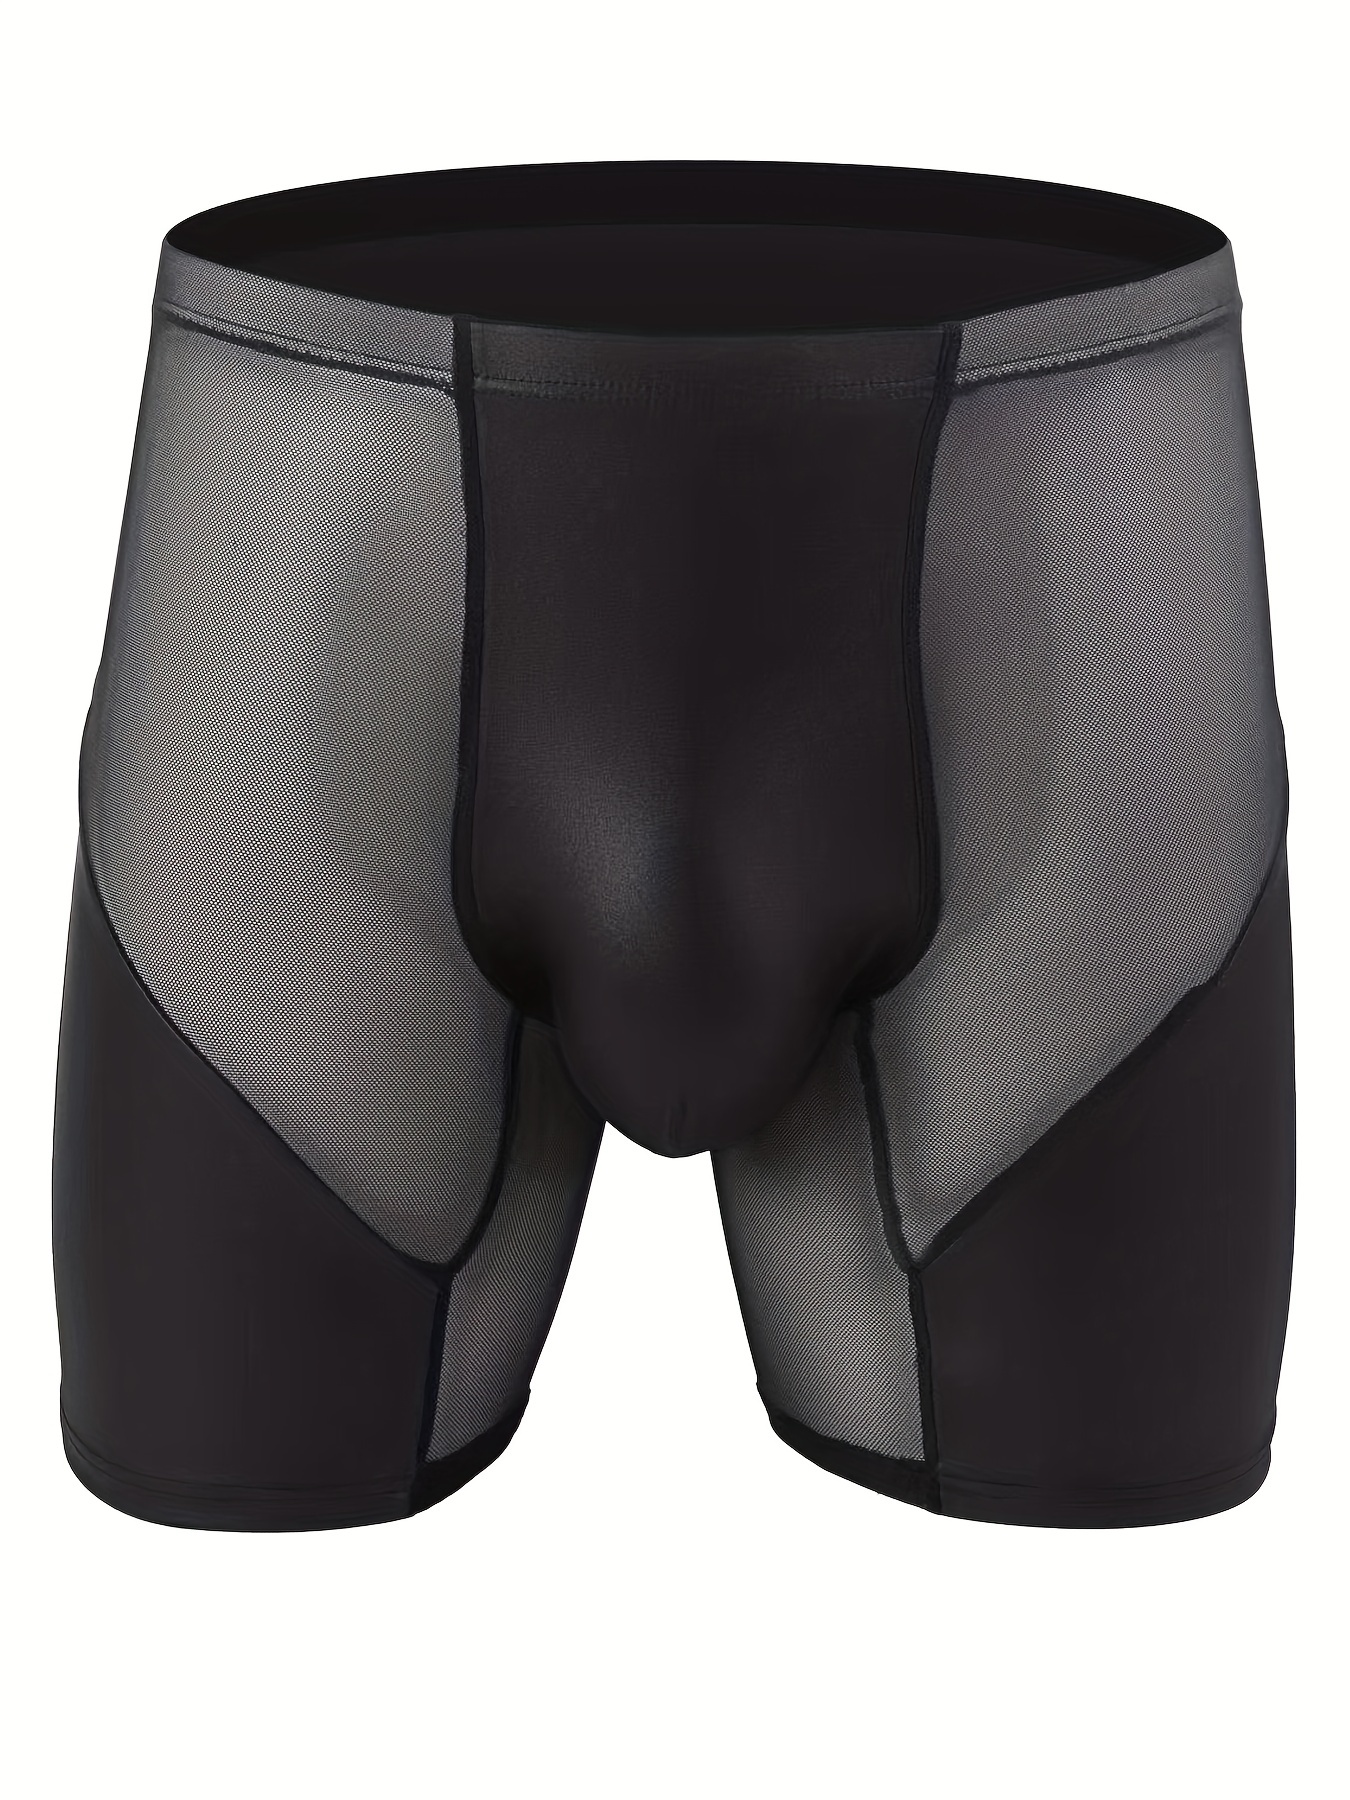 Men's Boxer Shorts Lycra Cotton Underwear U Convex Pouch